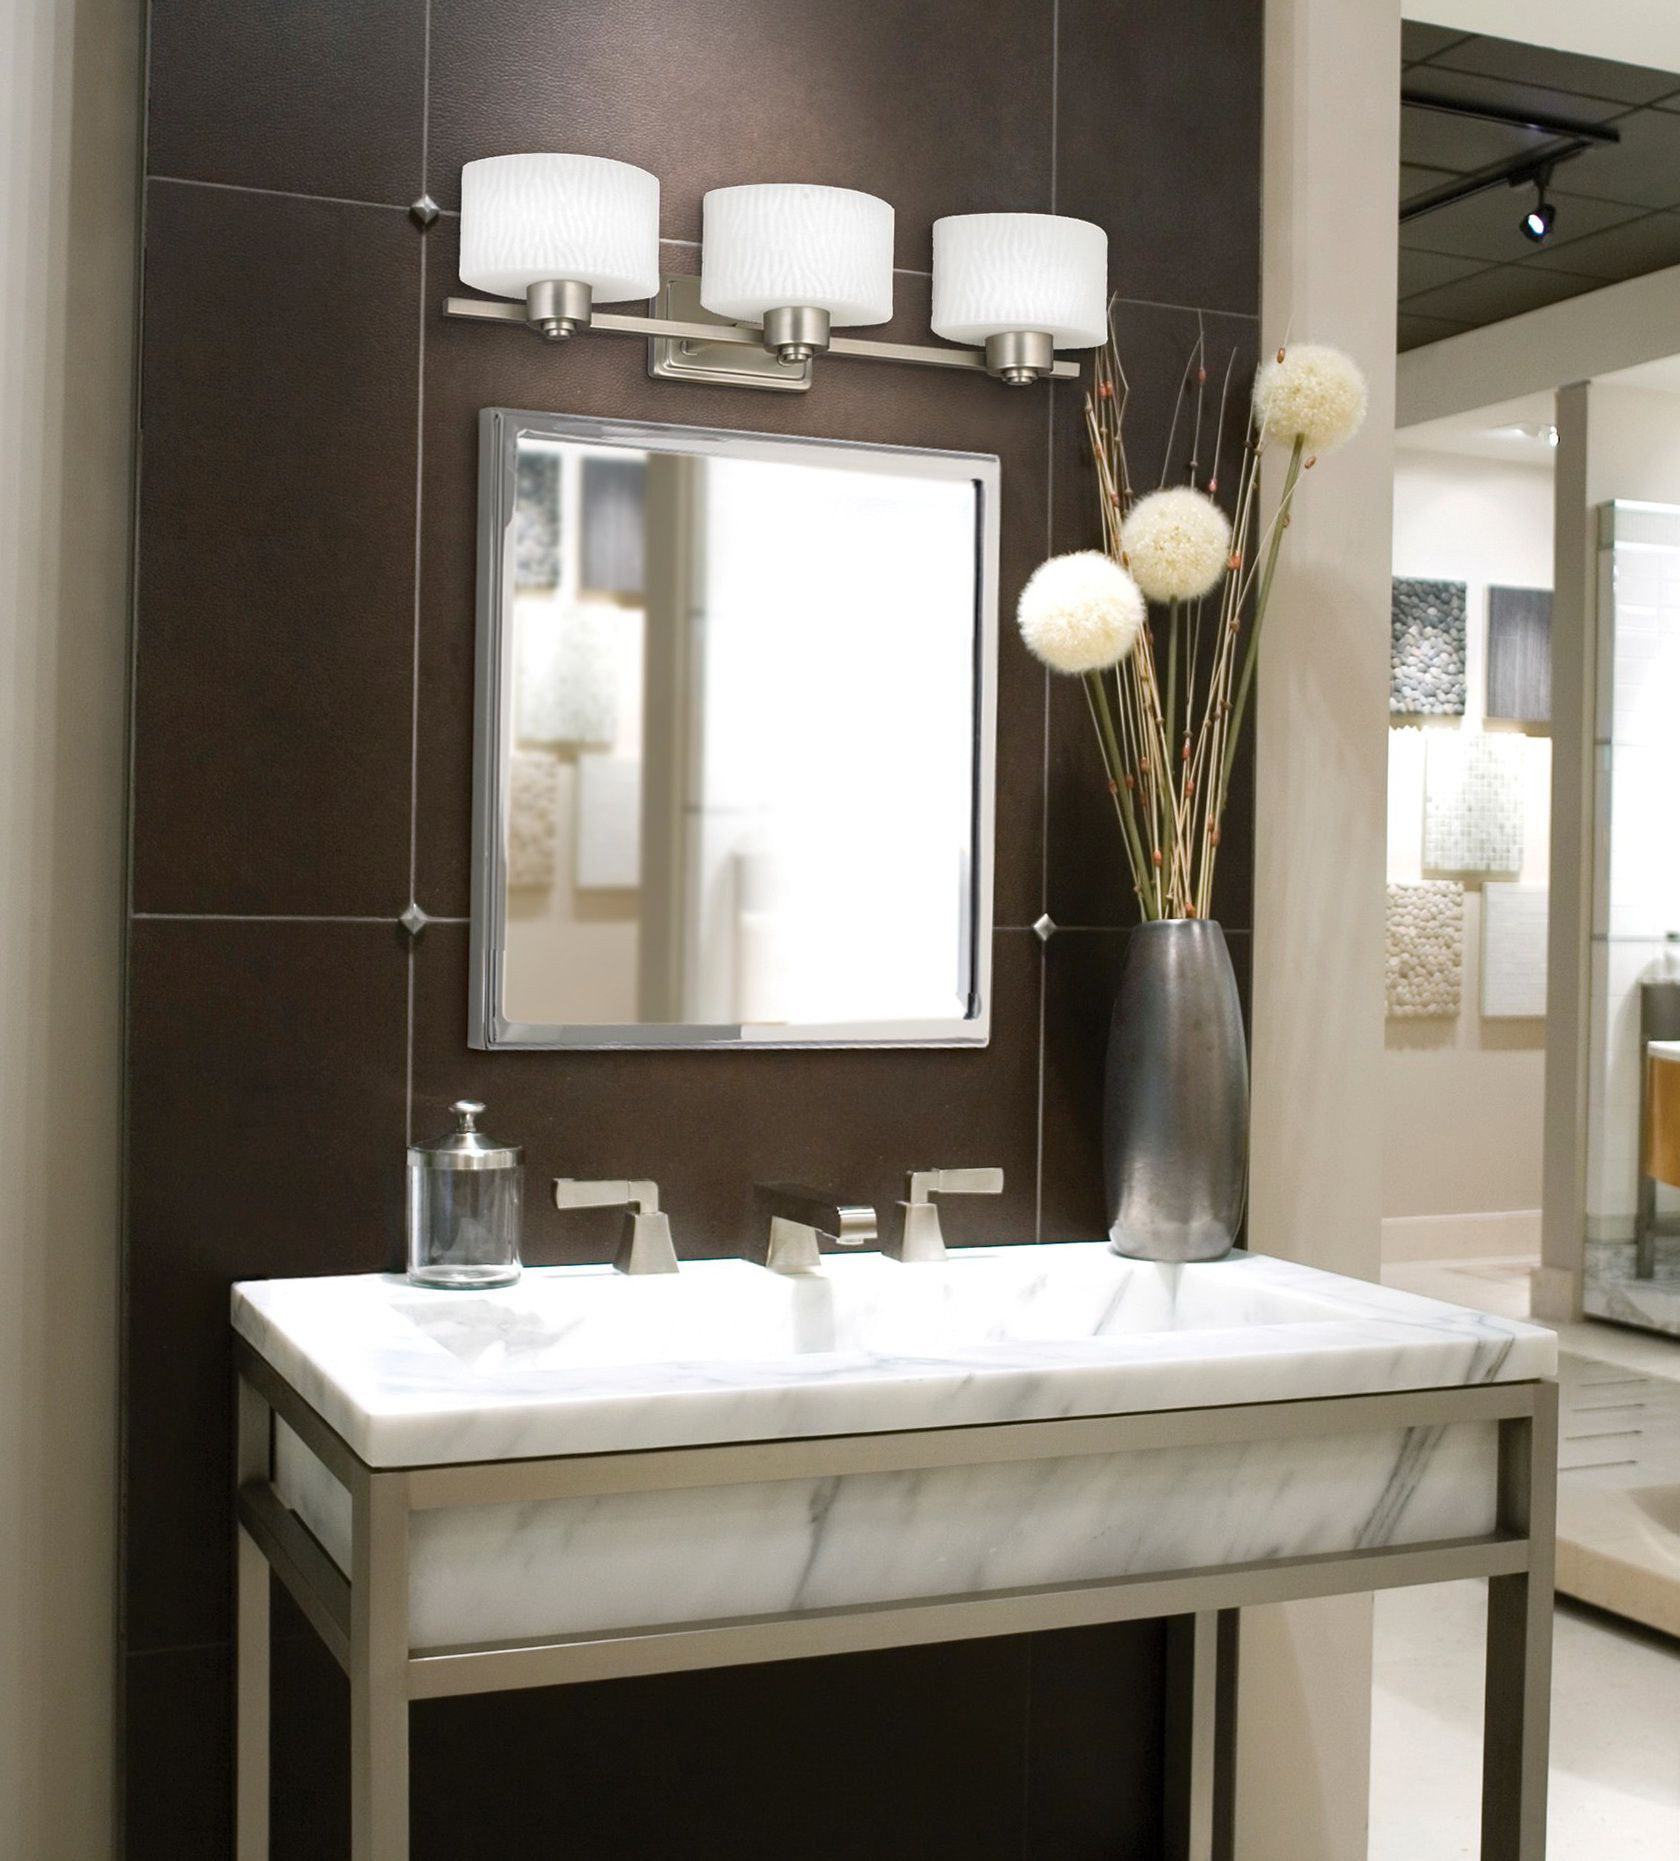 Bathroom Vanity Mirror Ideas
 Things You Haven’t Known Before About Bathroom Vanity